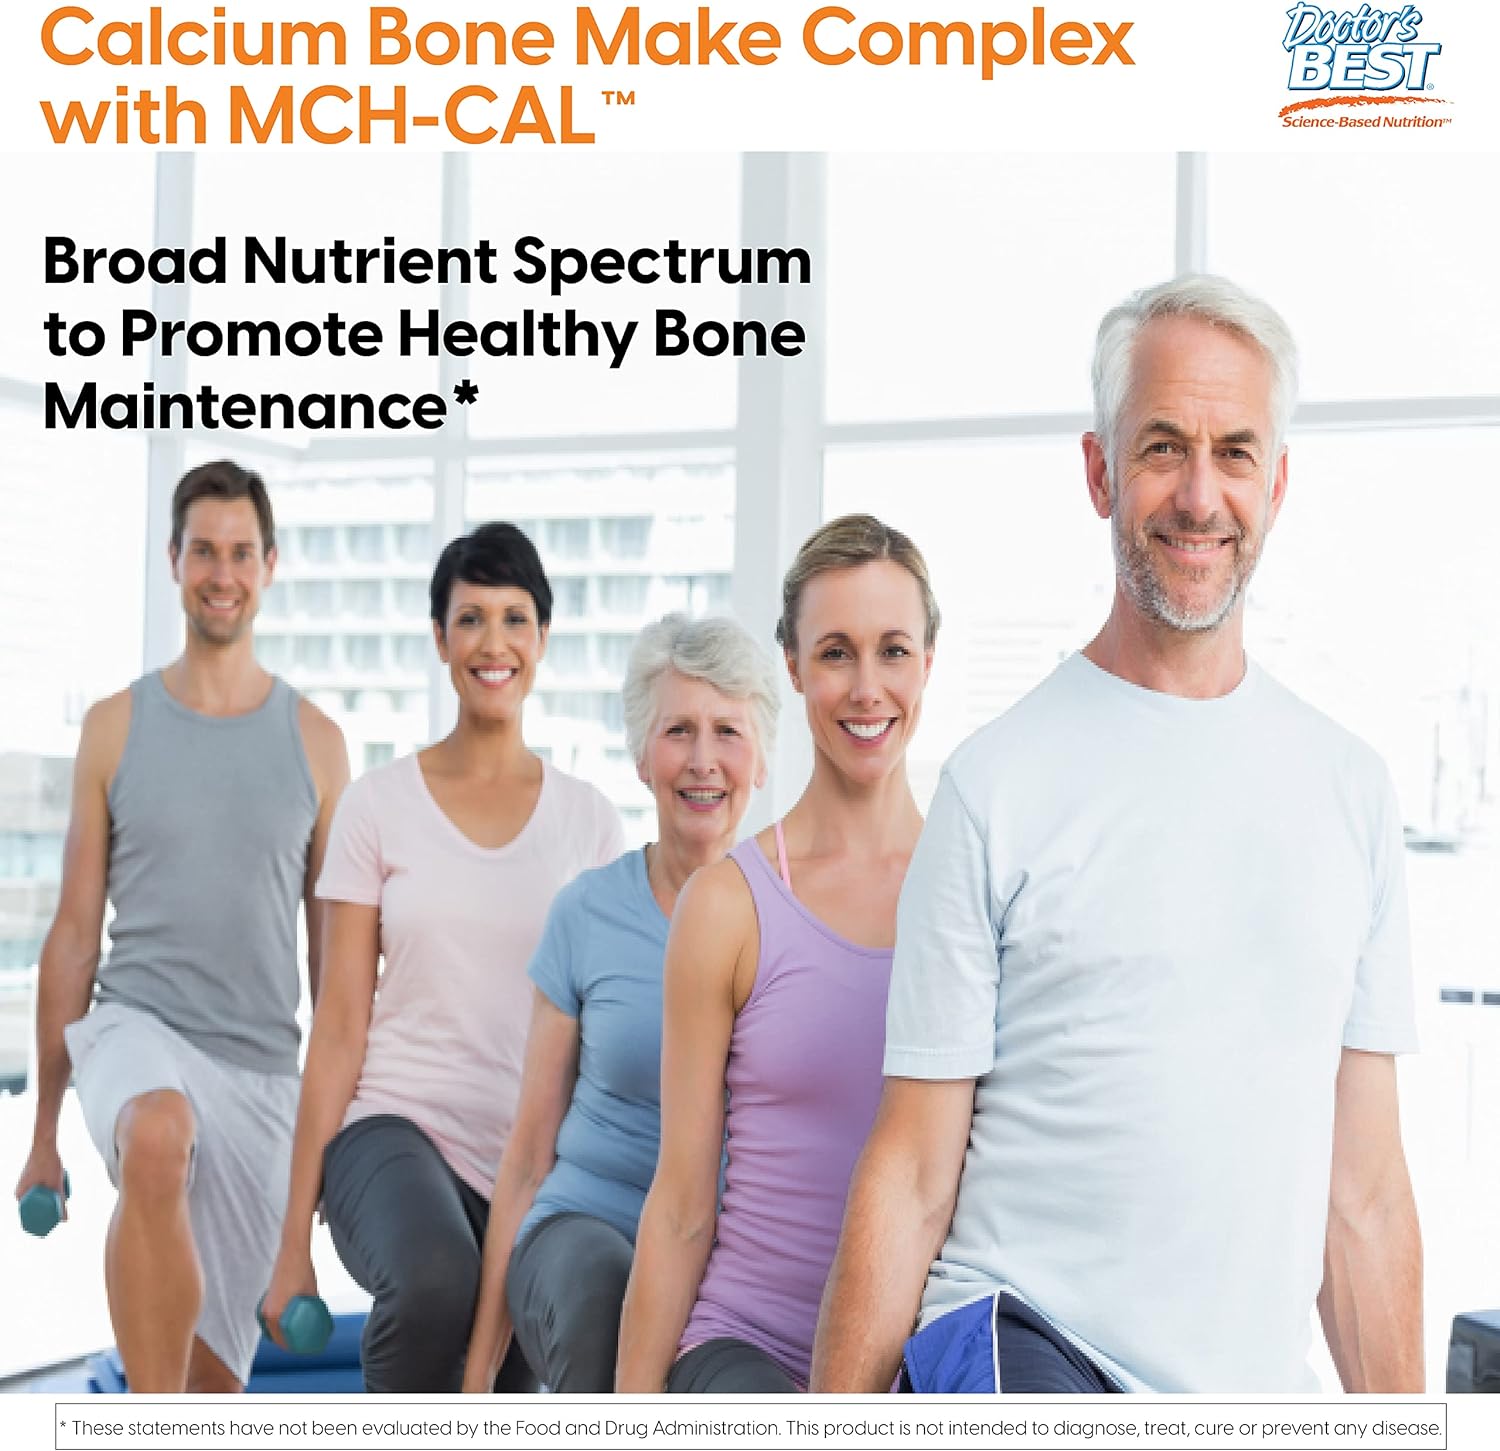 Doctors Best Calcium Bone Maker Complex with MCHCal, Supports Bone Health, Muscular, Skeletal  Vascular Health, 180 Caps